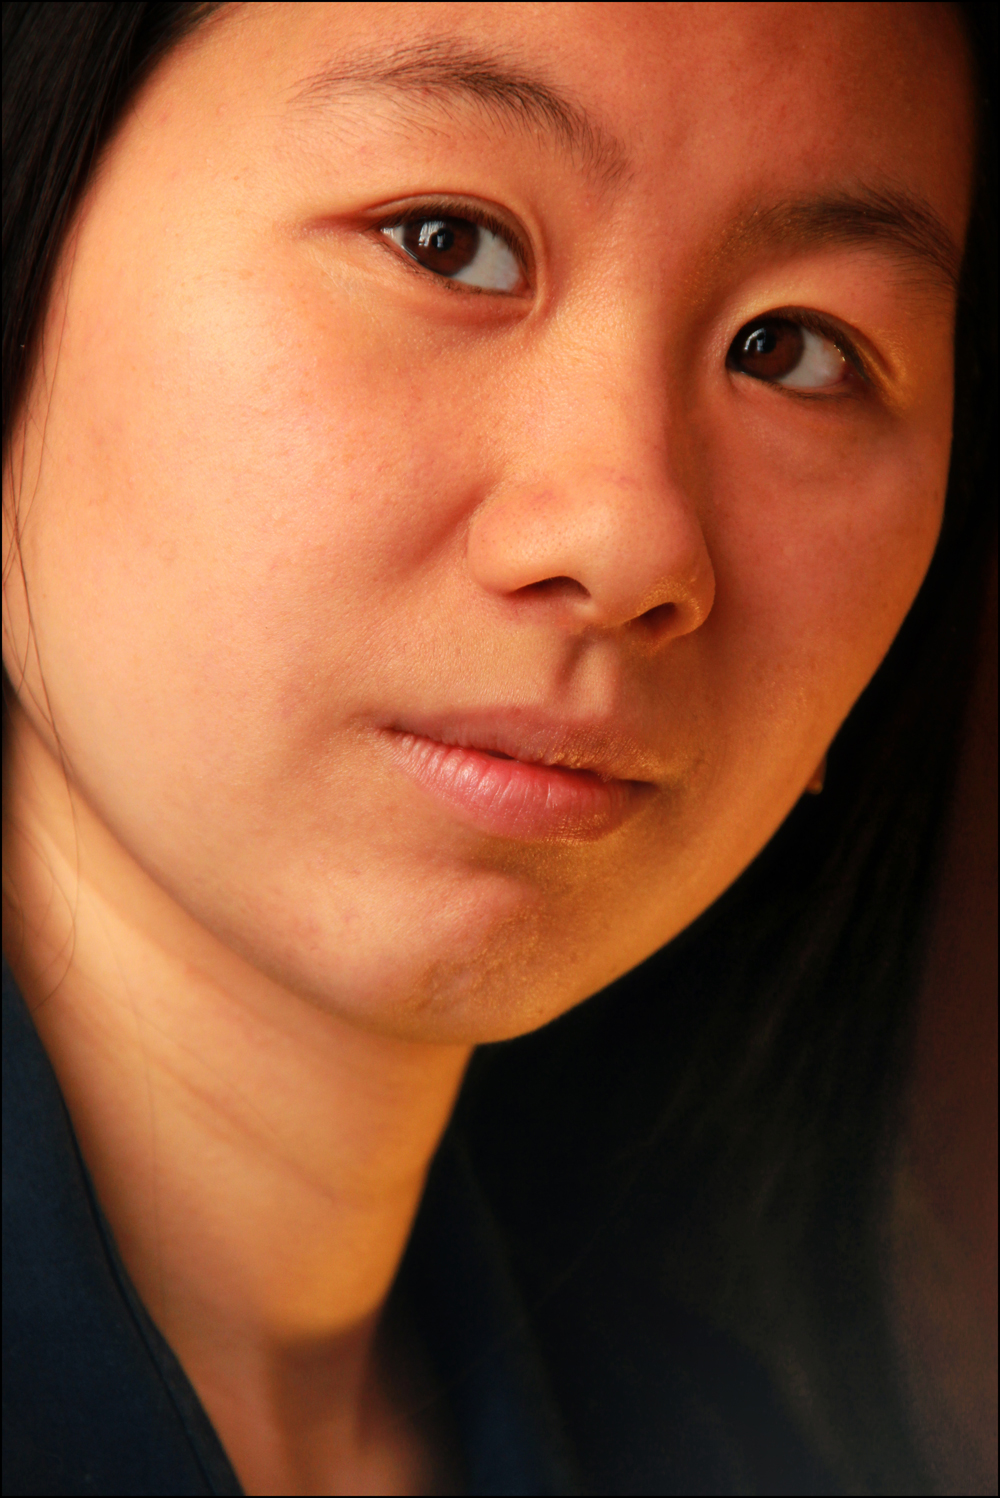 Image of Lisa Chow, courtesy of SLA in 2011.